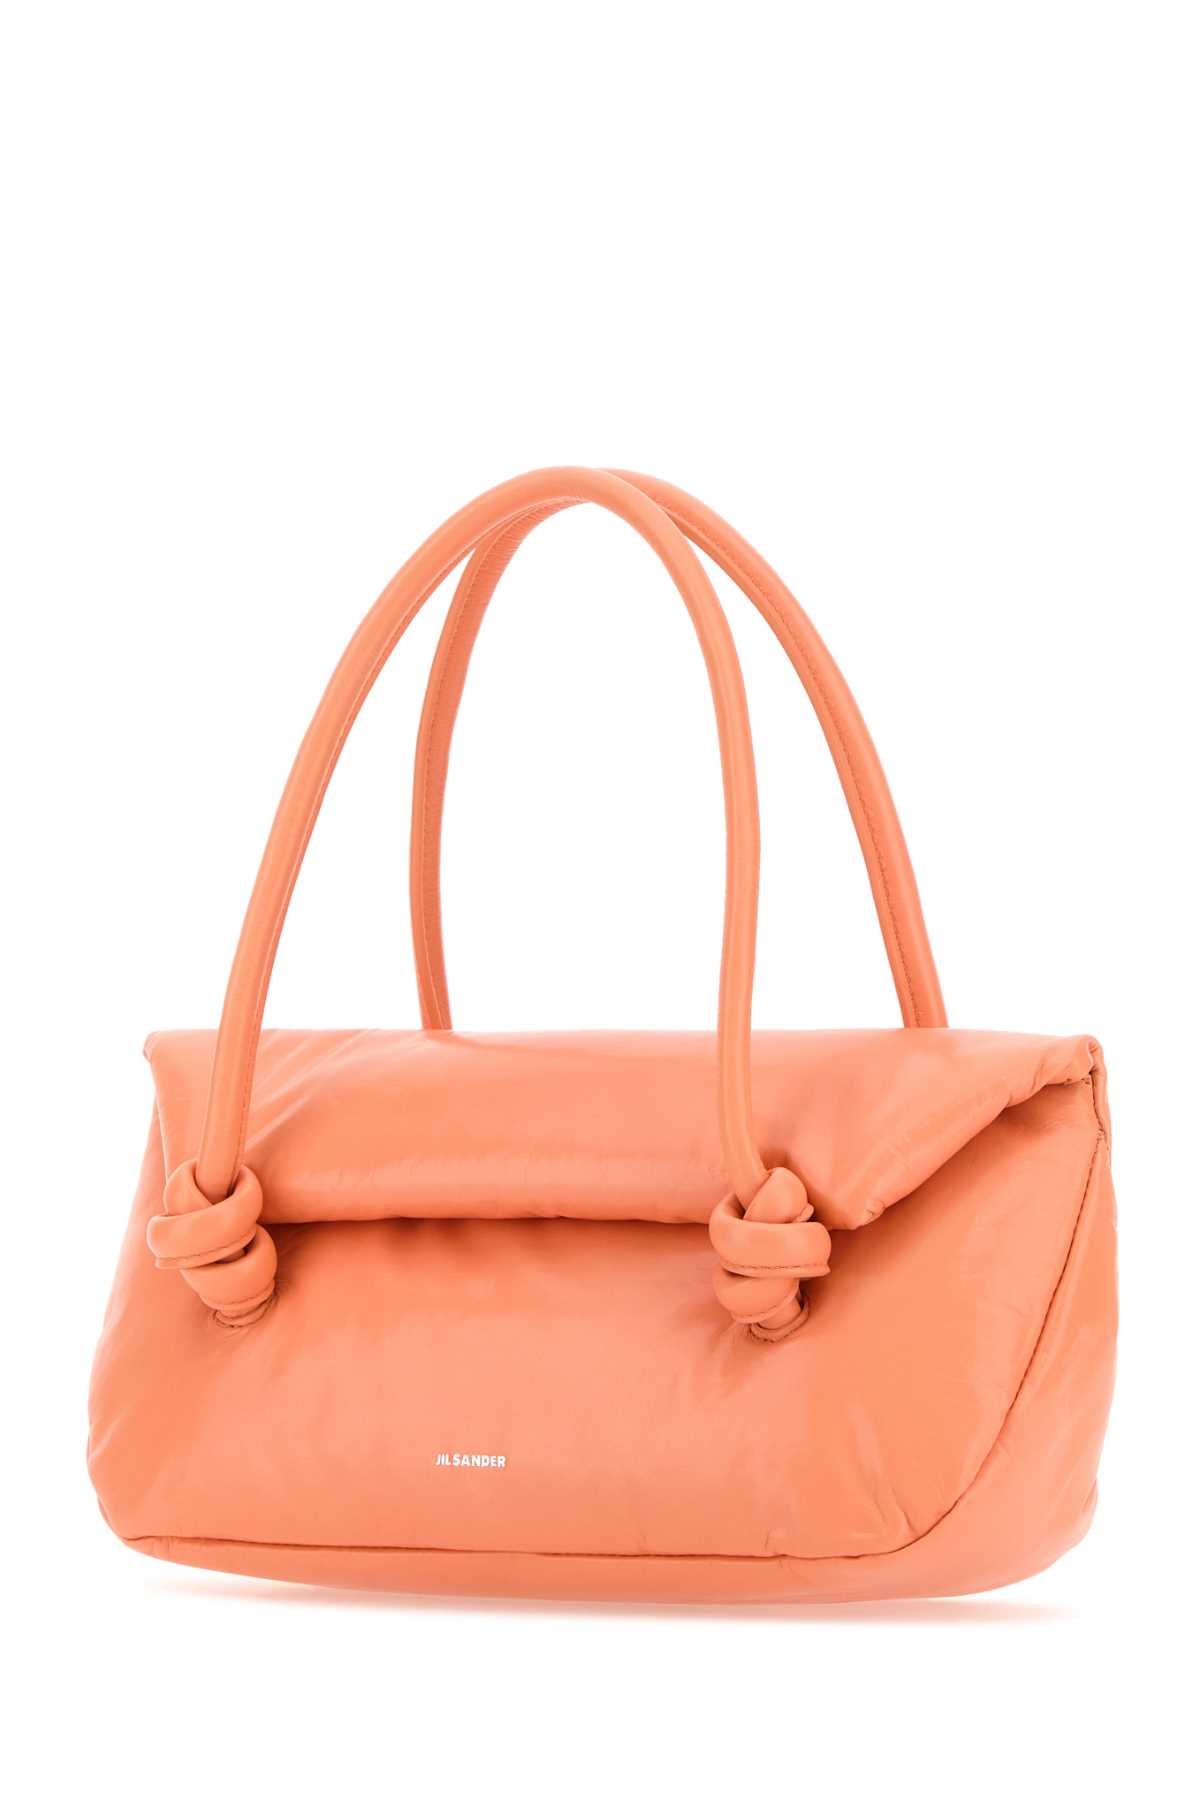 Jil Sander Peach Pink Leather Small Knot Handle Handbag In 639